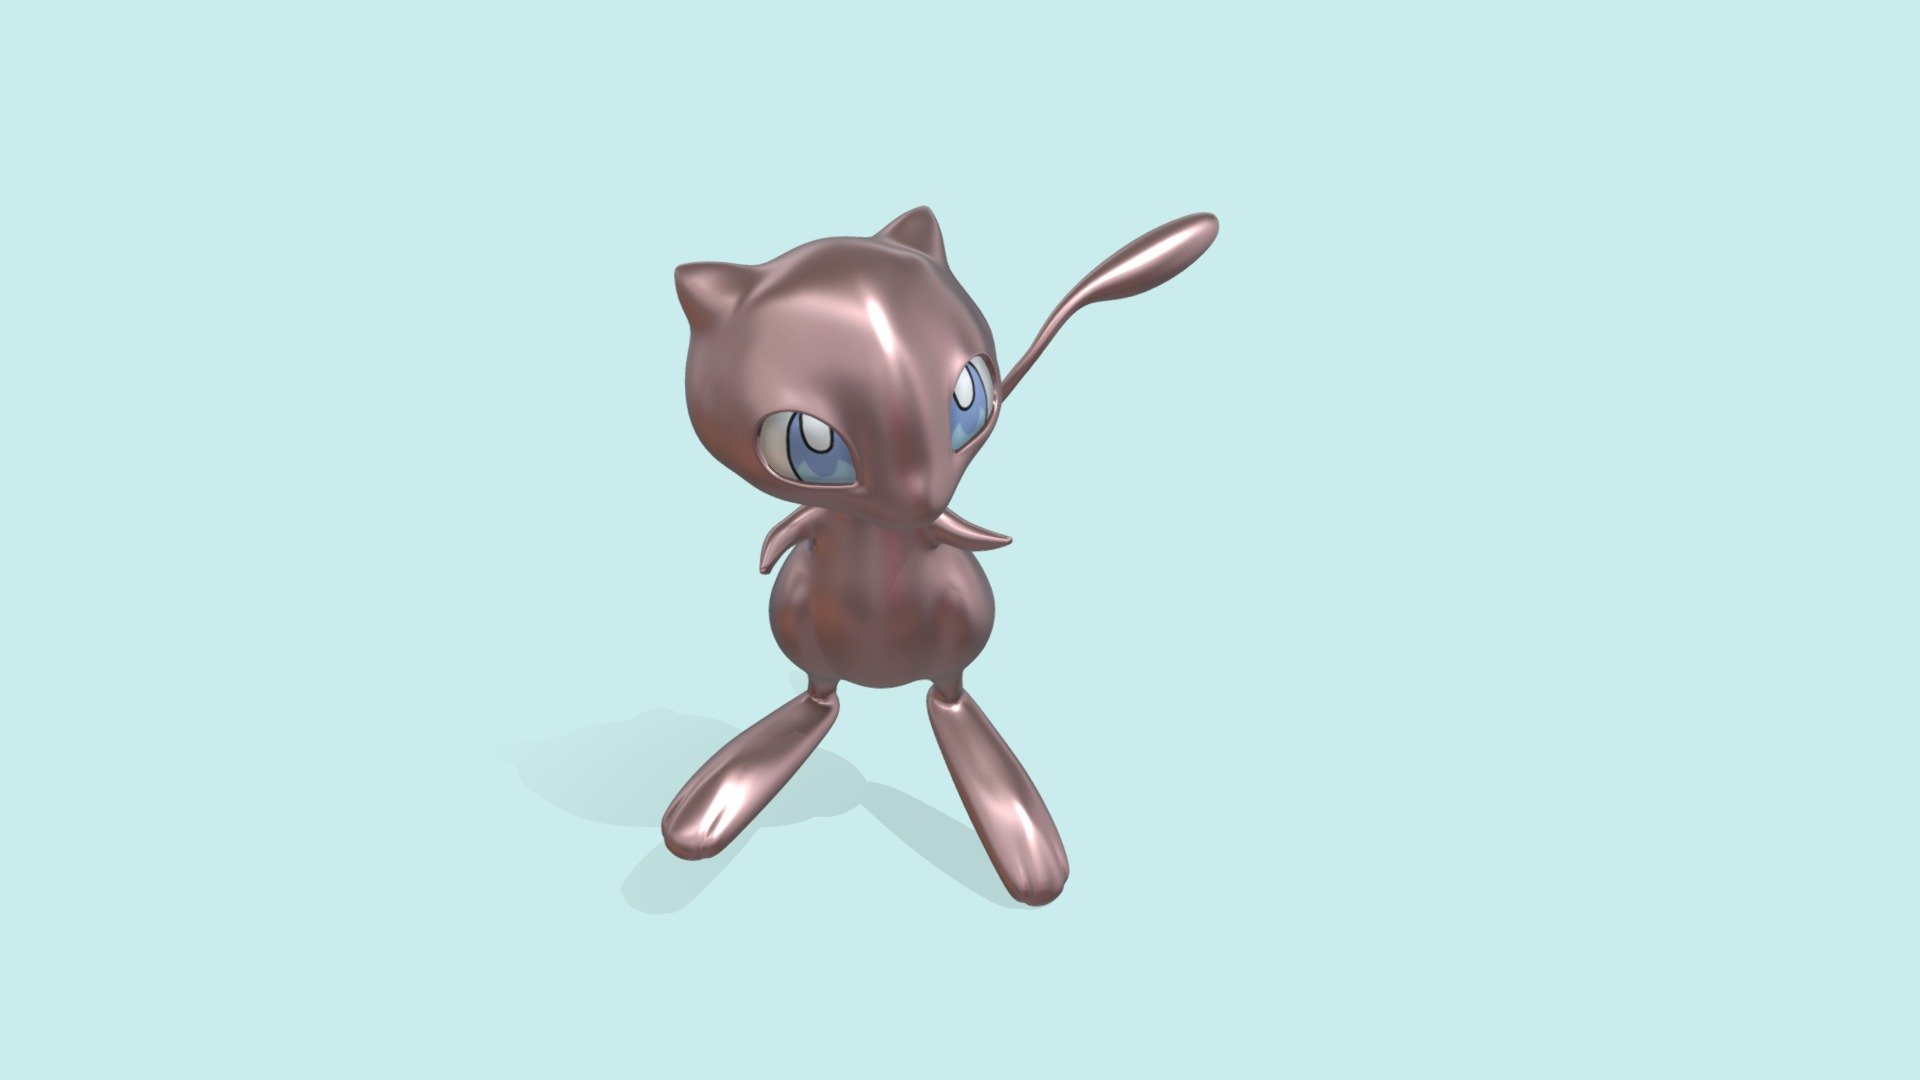 ArtStation - Pokemon - Mew